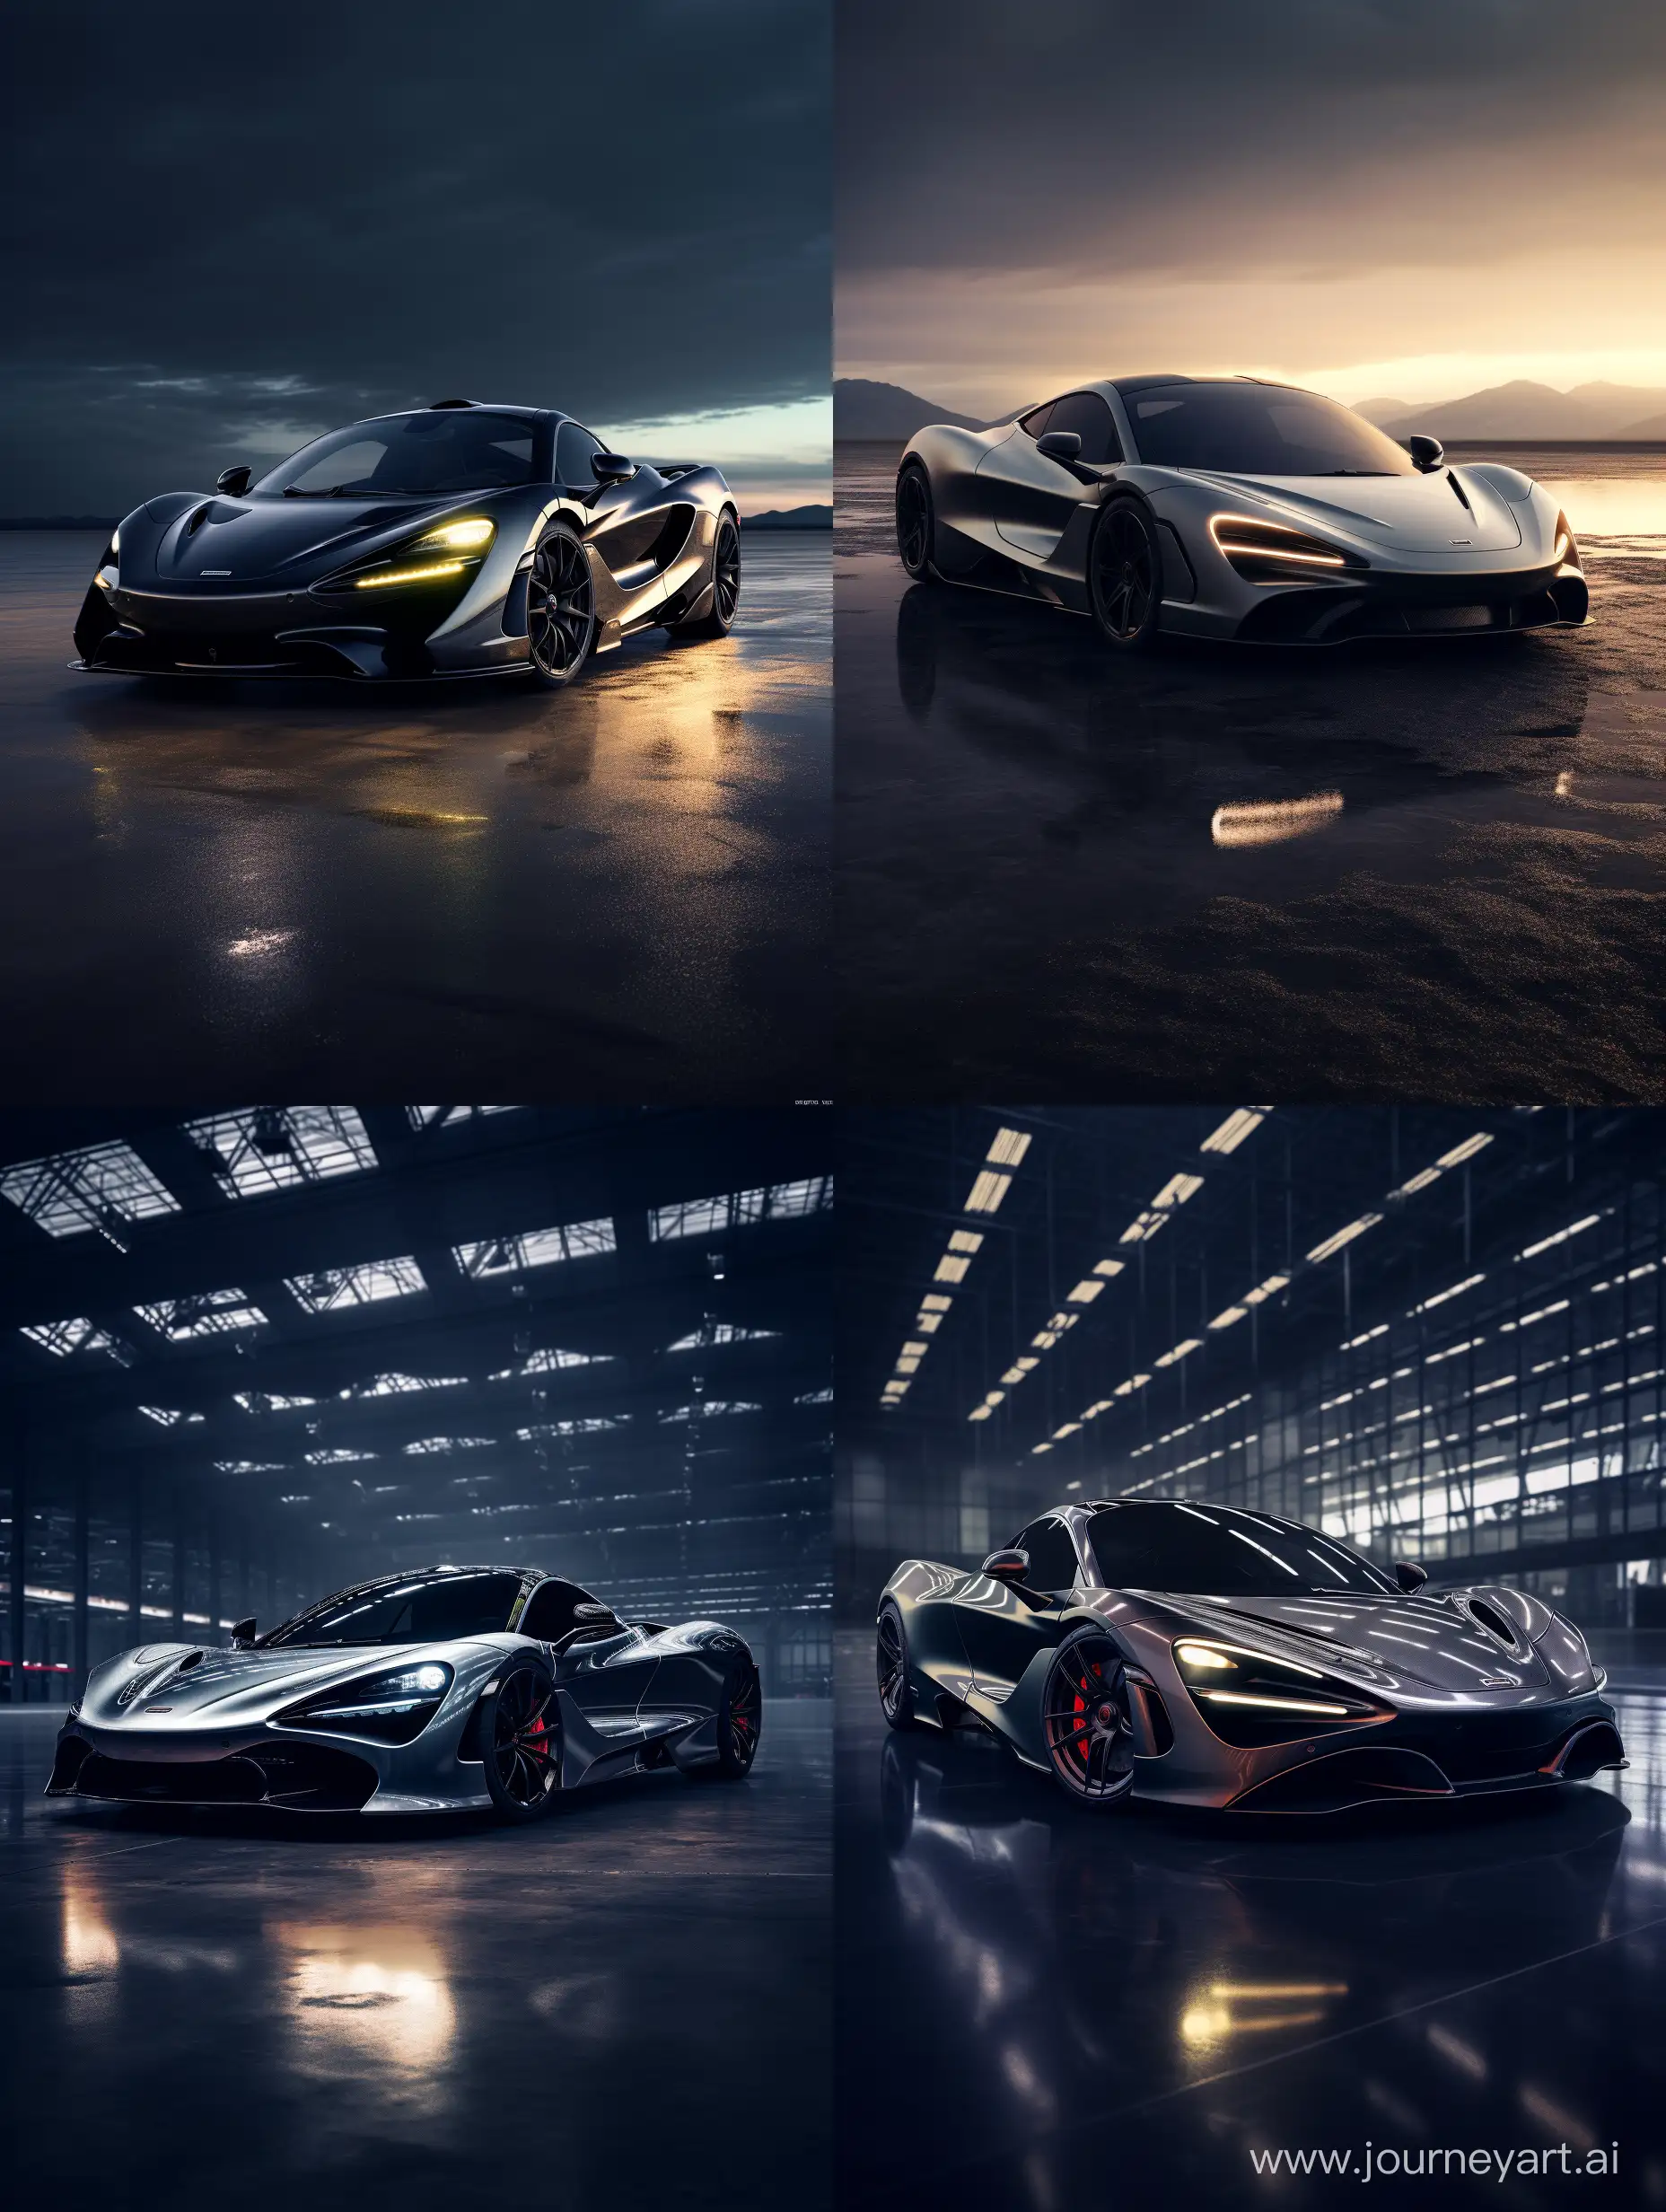 McLaren car was standing in dim light, dark area, 8k, cinematic effects and lighting, unreal engine, 4k, realistic, epic realism